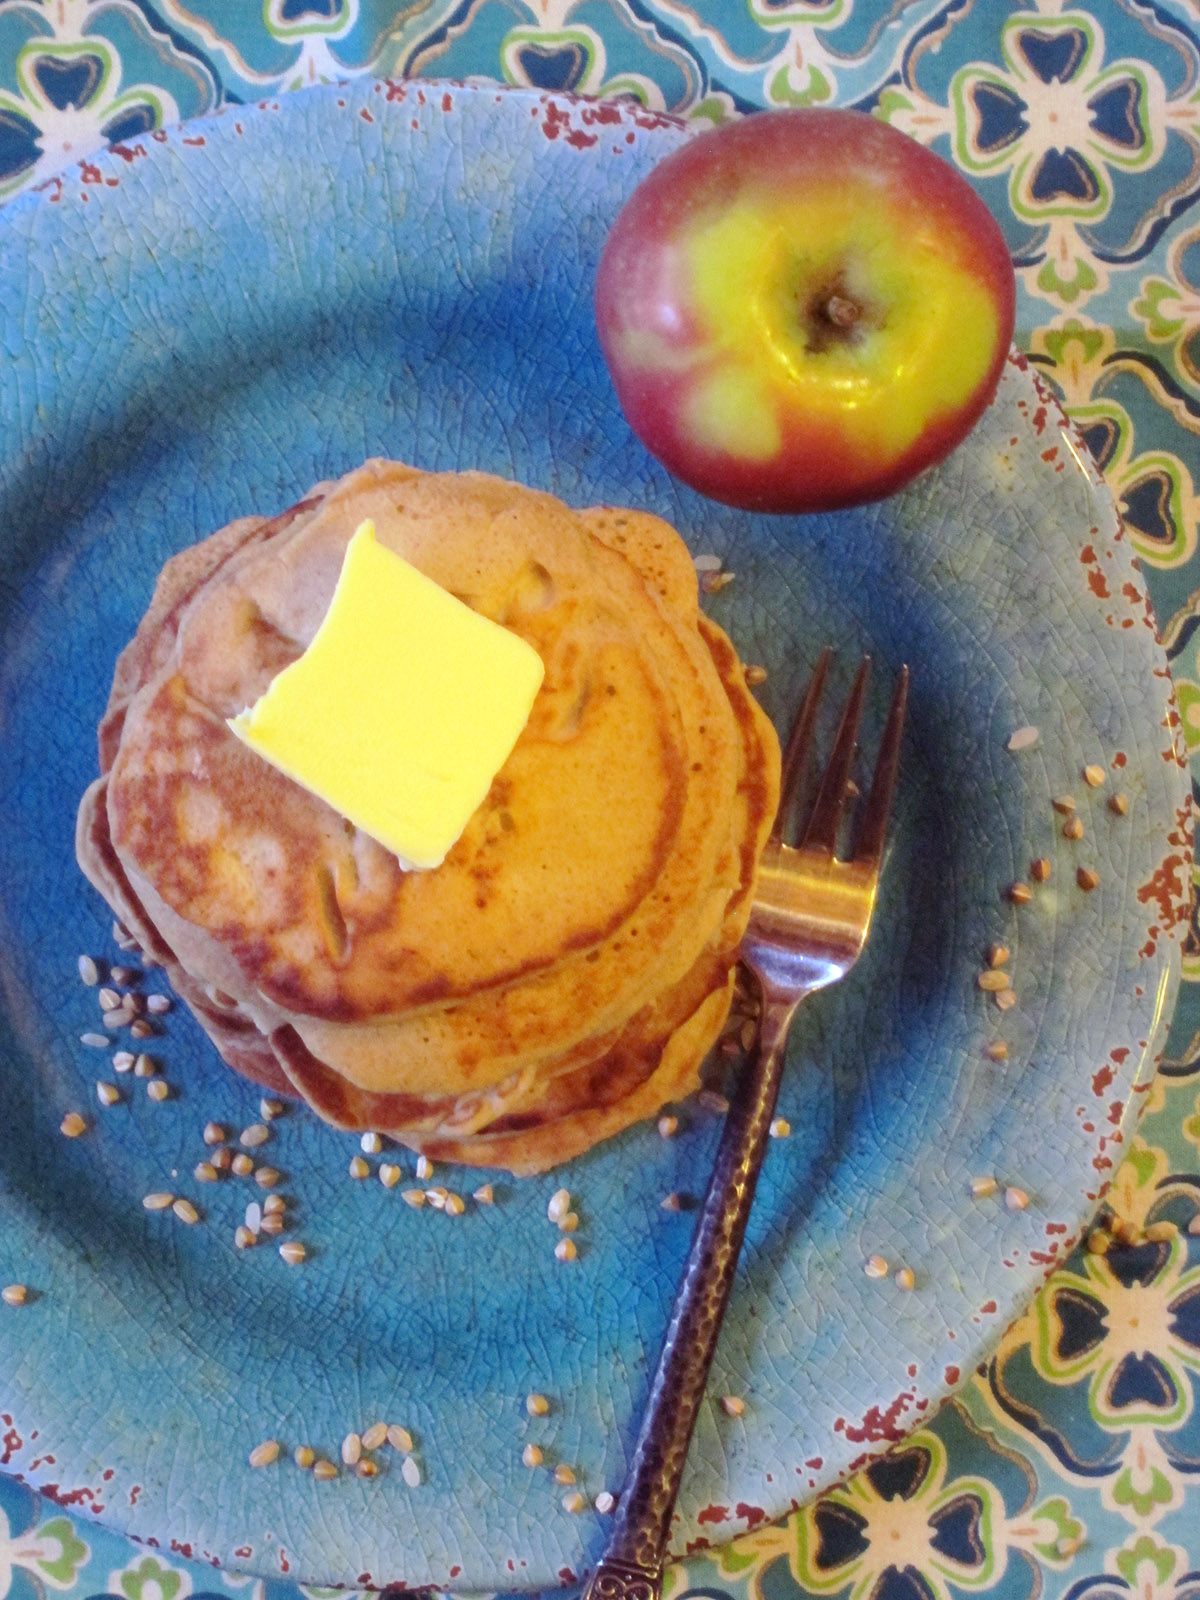 Buckwheat & Yogurt Pancakes with Apples - Gluten Free